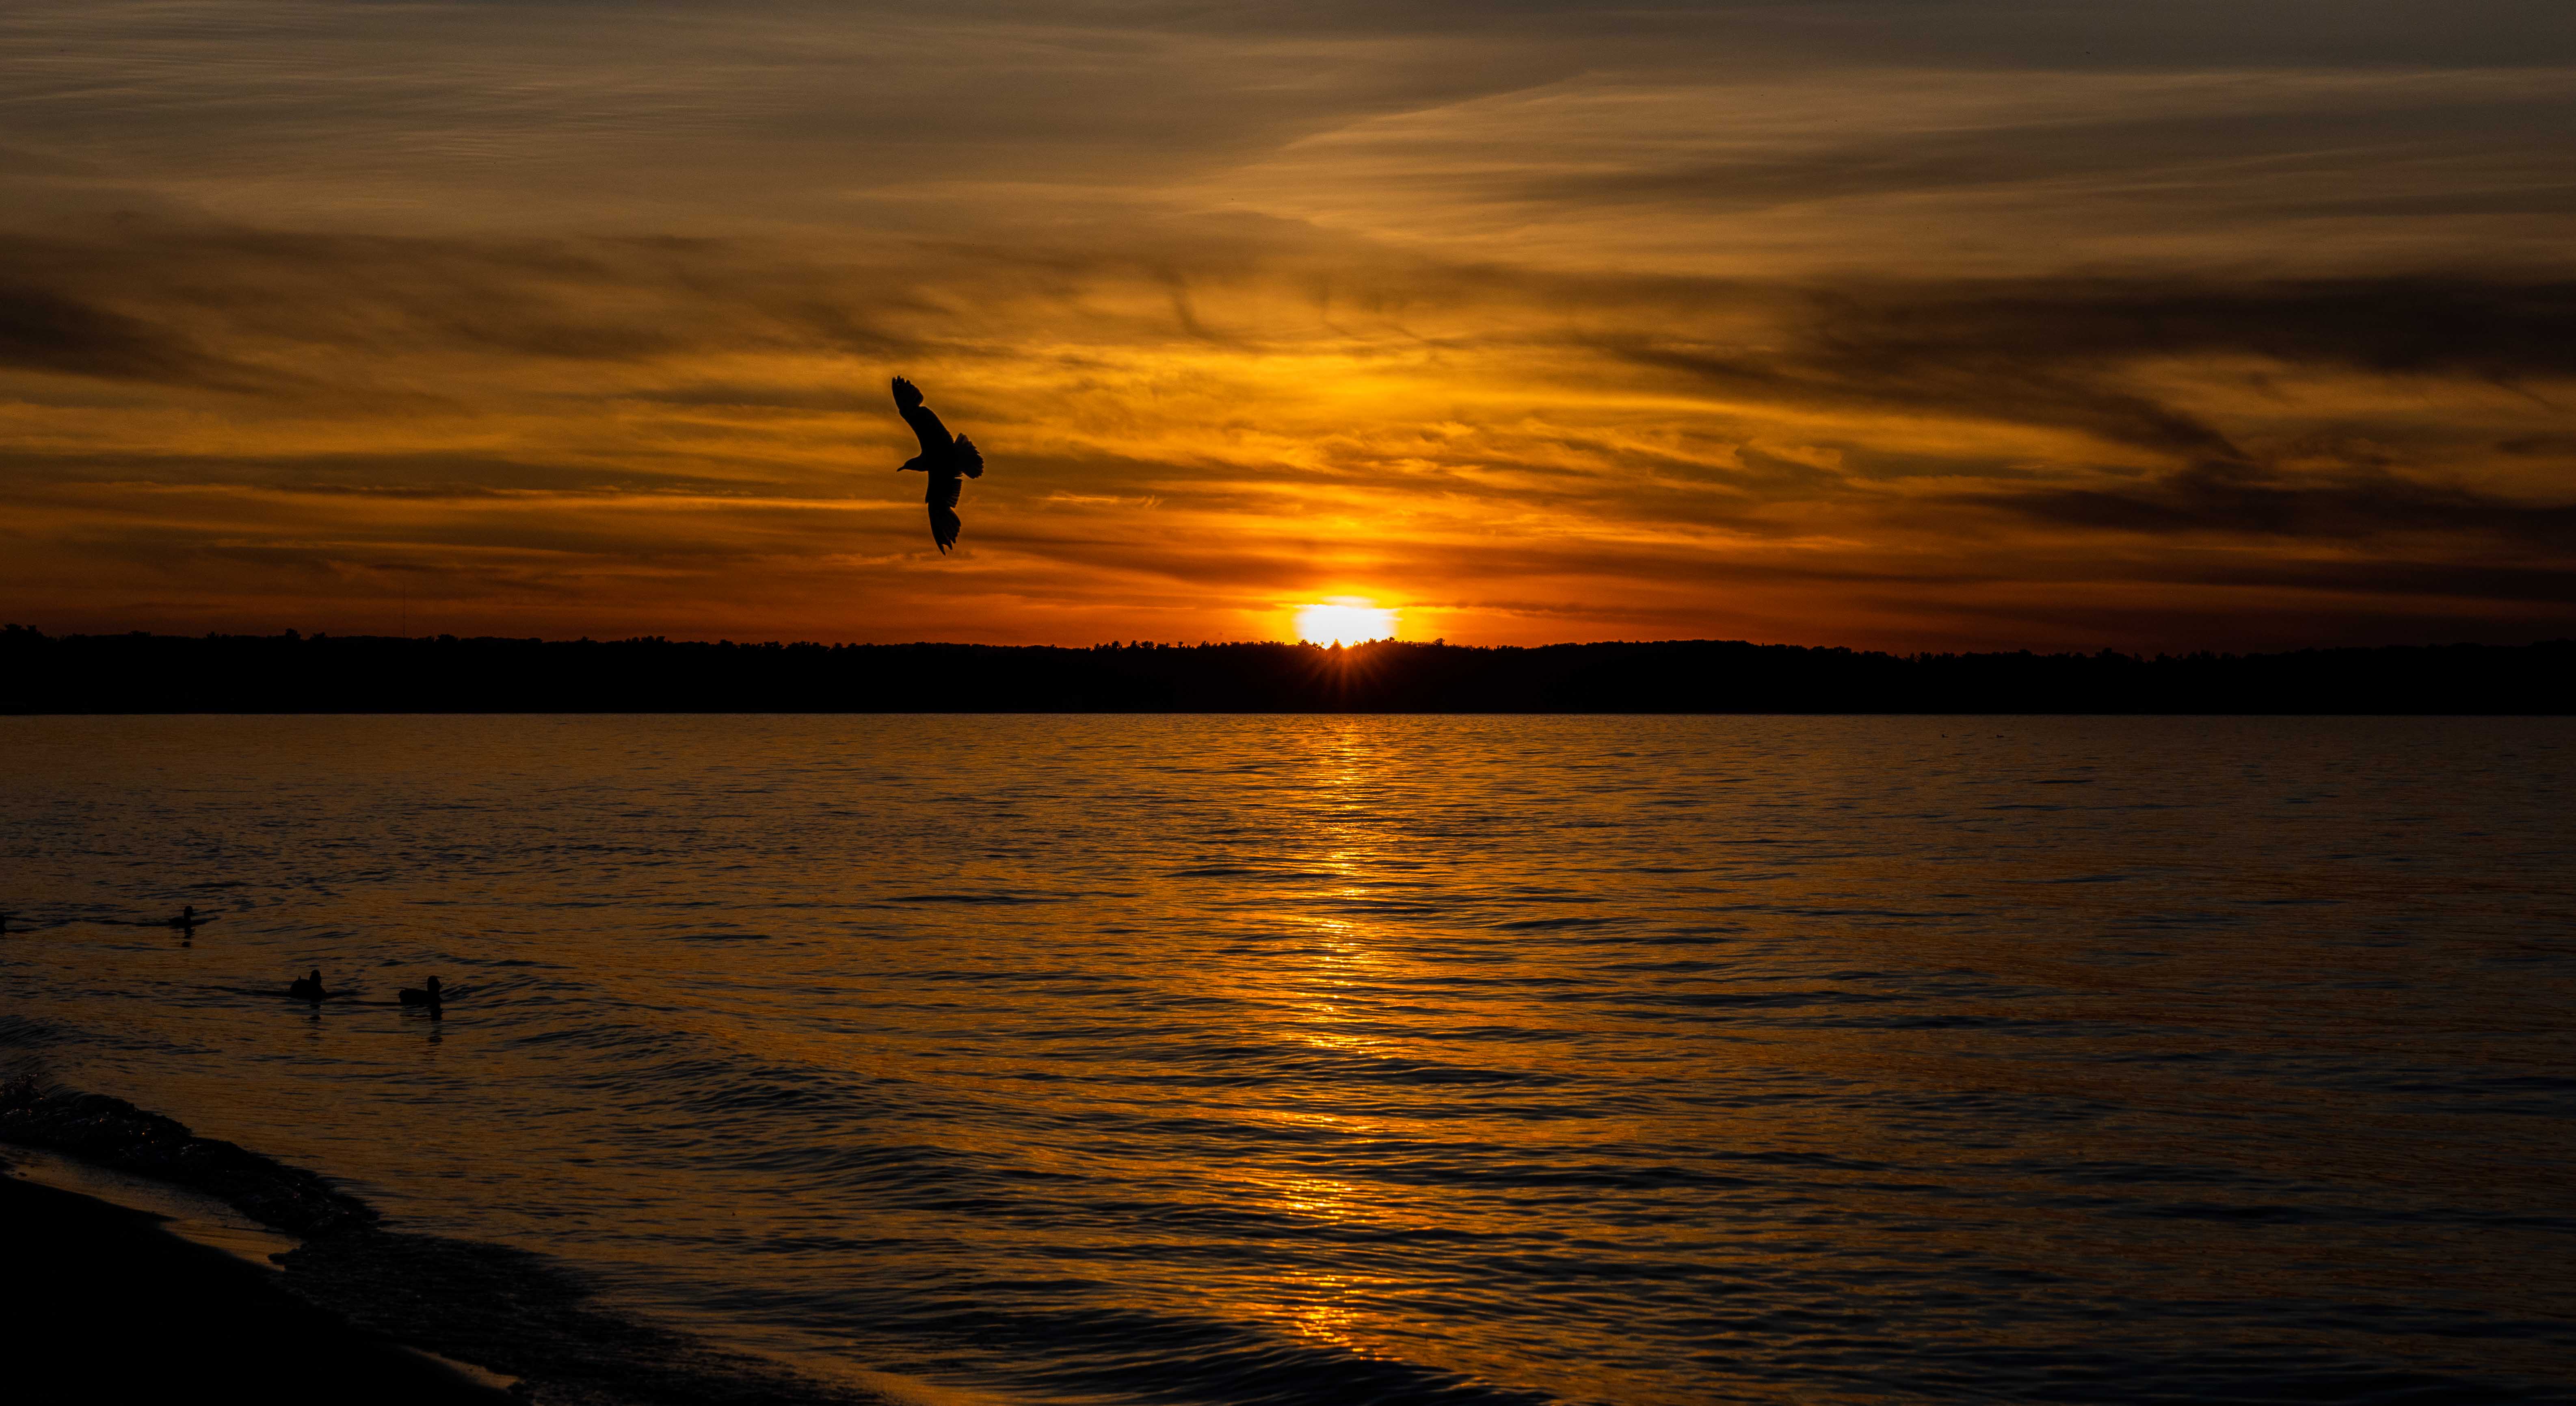 Sunset In Flight by Tom Barbernitz